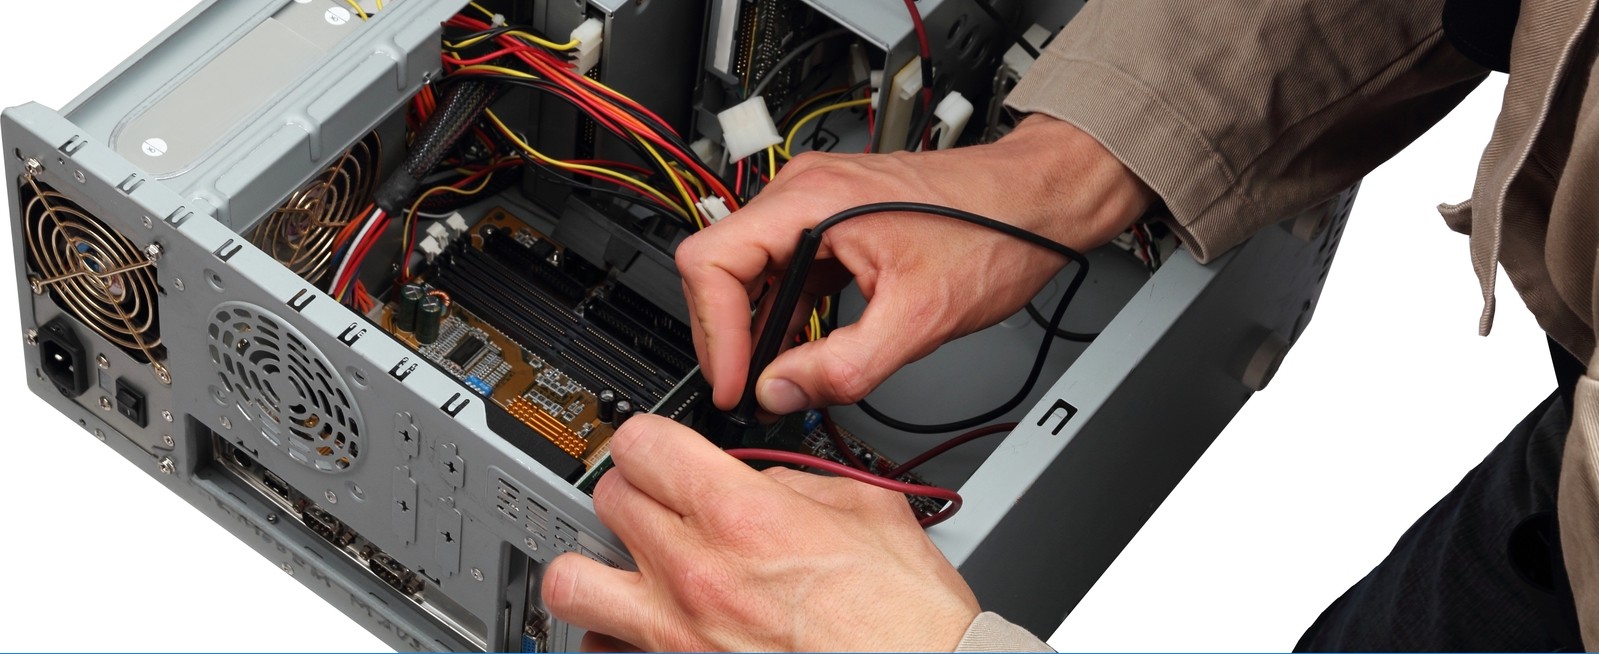 Dell computer repair service montreal